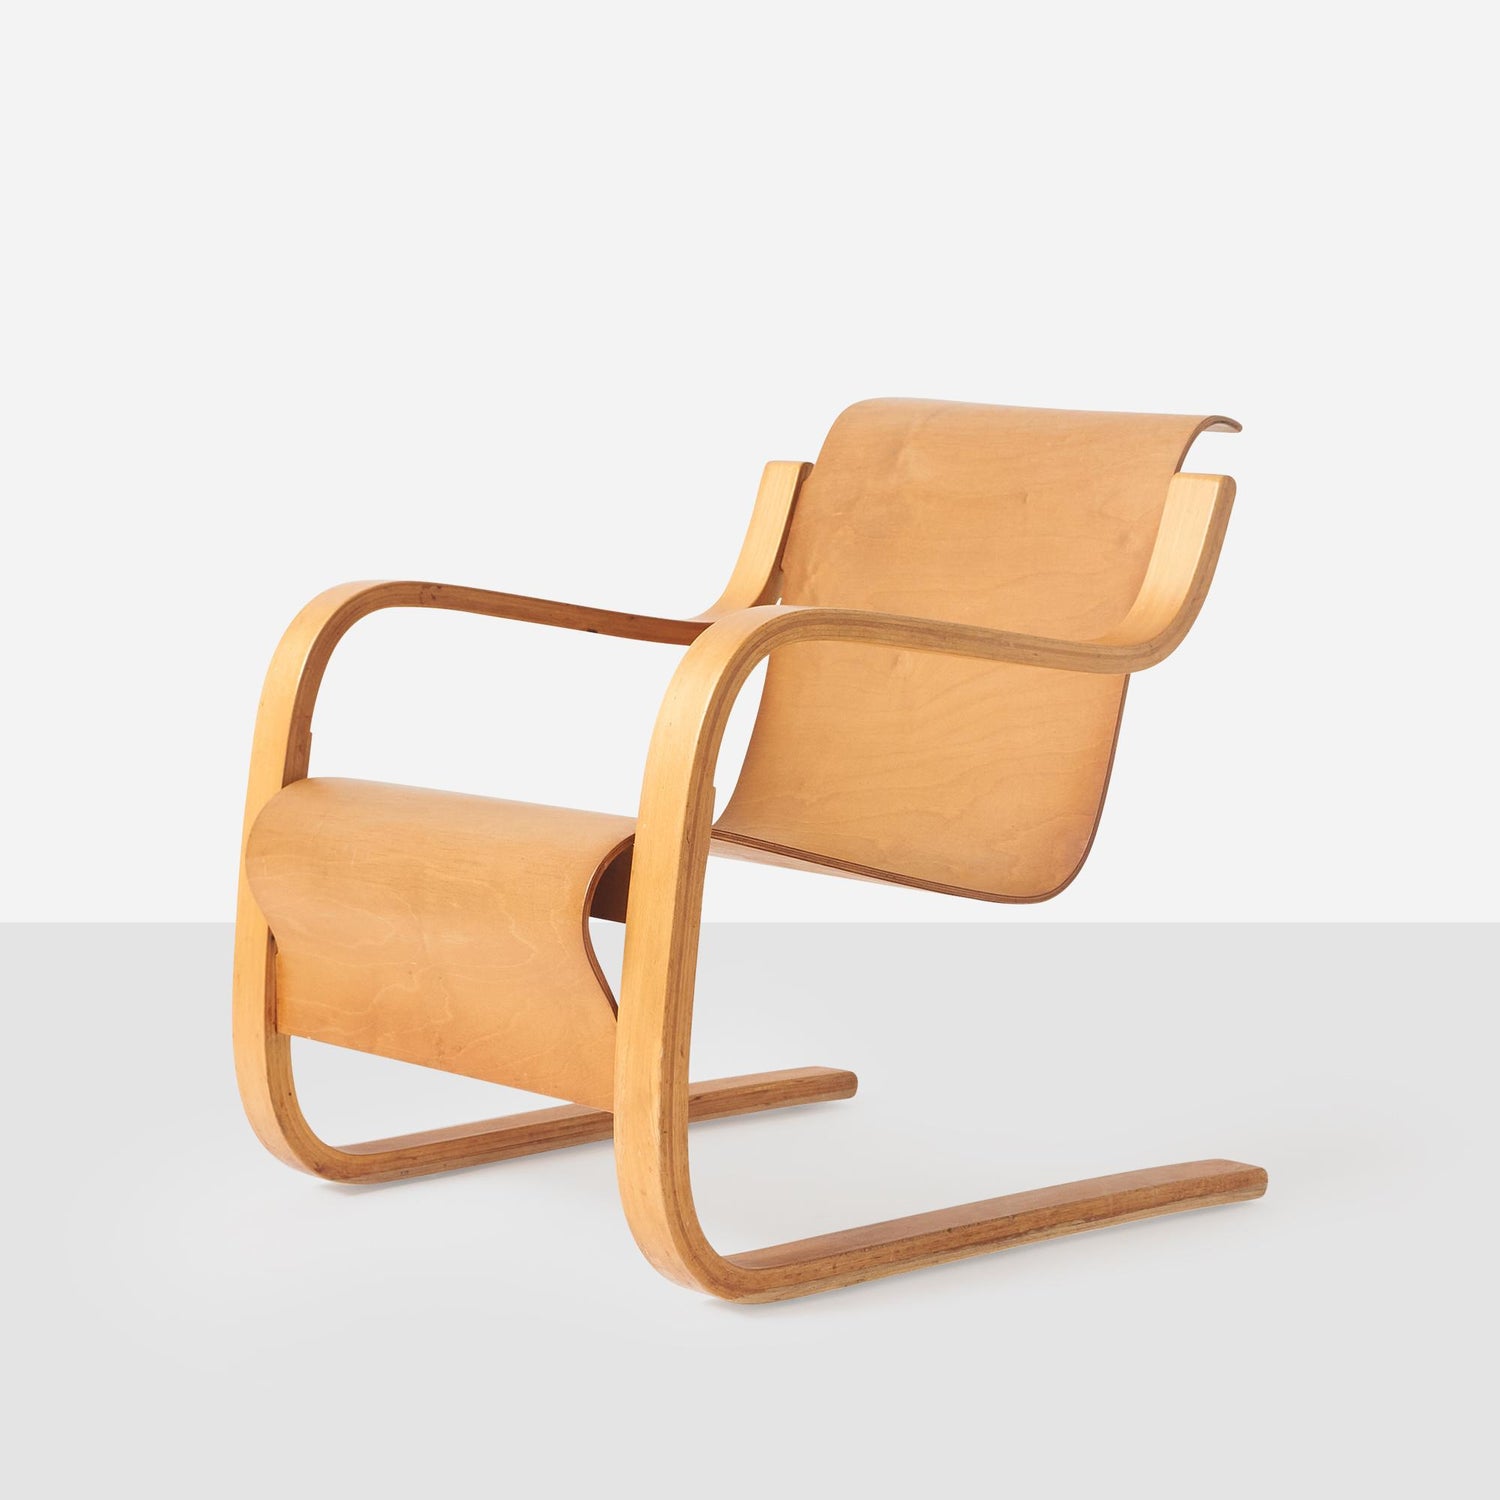 https://a.1stdibscdn.com/alvar-aalto-cantilever-chair-model-31-for-sale/f_9086/f_32549121700111851951/AlvarAalto_A0300_Chair_0025_master.jpg?width=1500